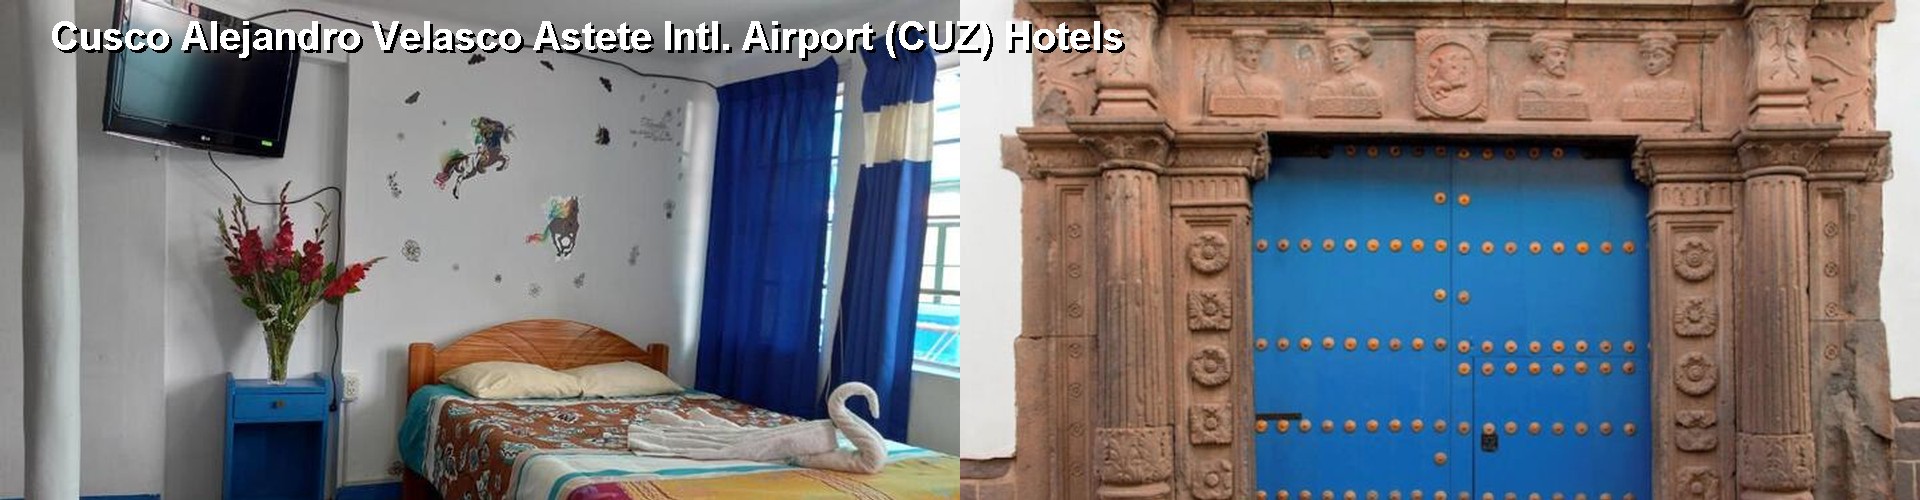 5 Best Hotels near Cusco Alejandro Velasco Astete Intl. Airport (CUZ)